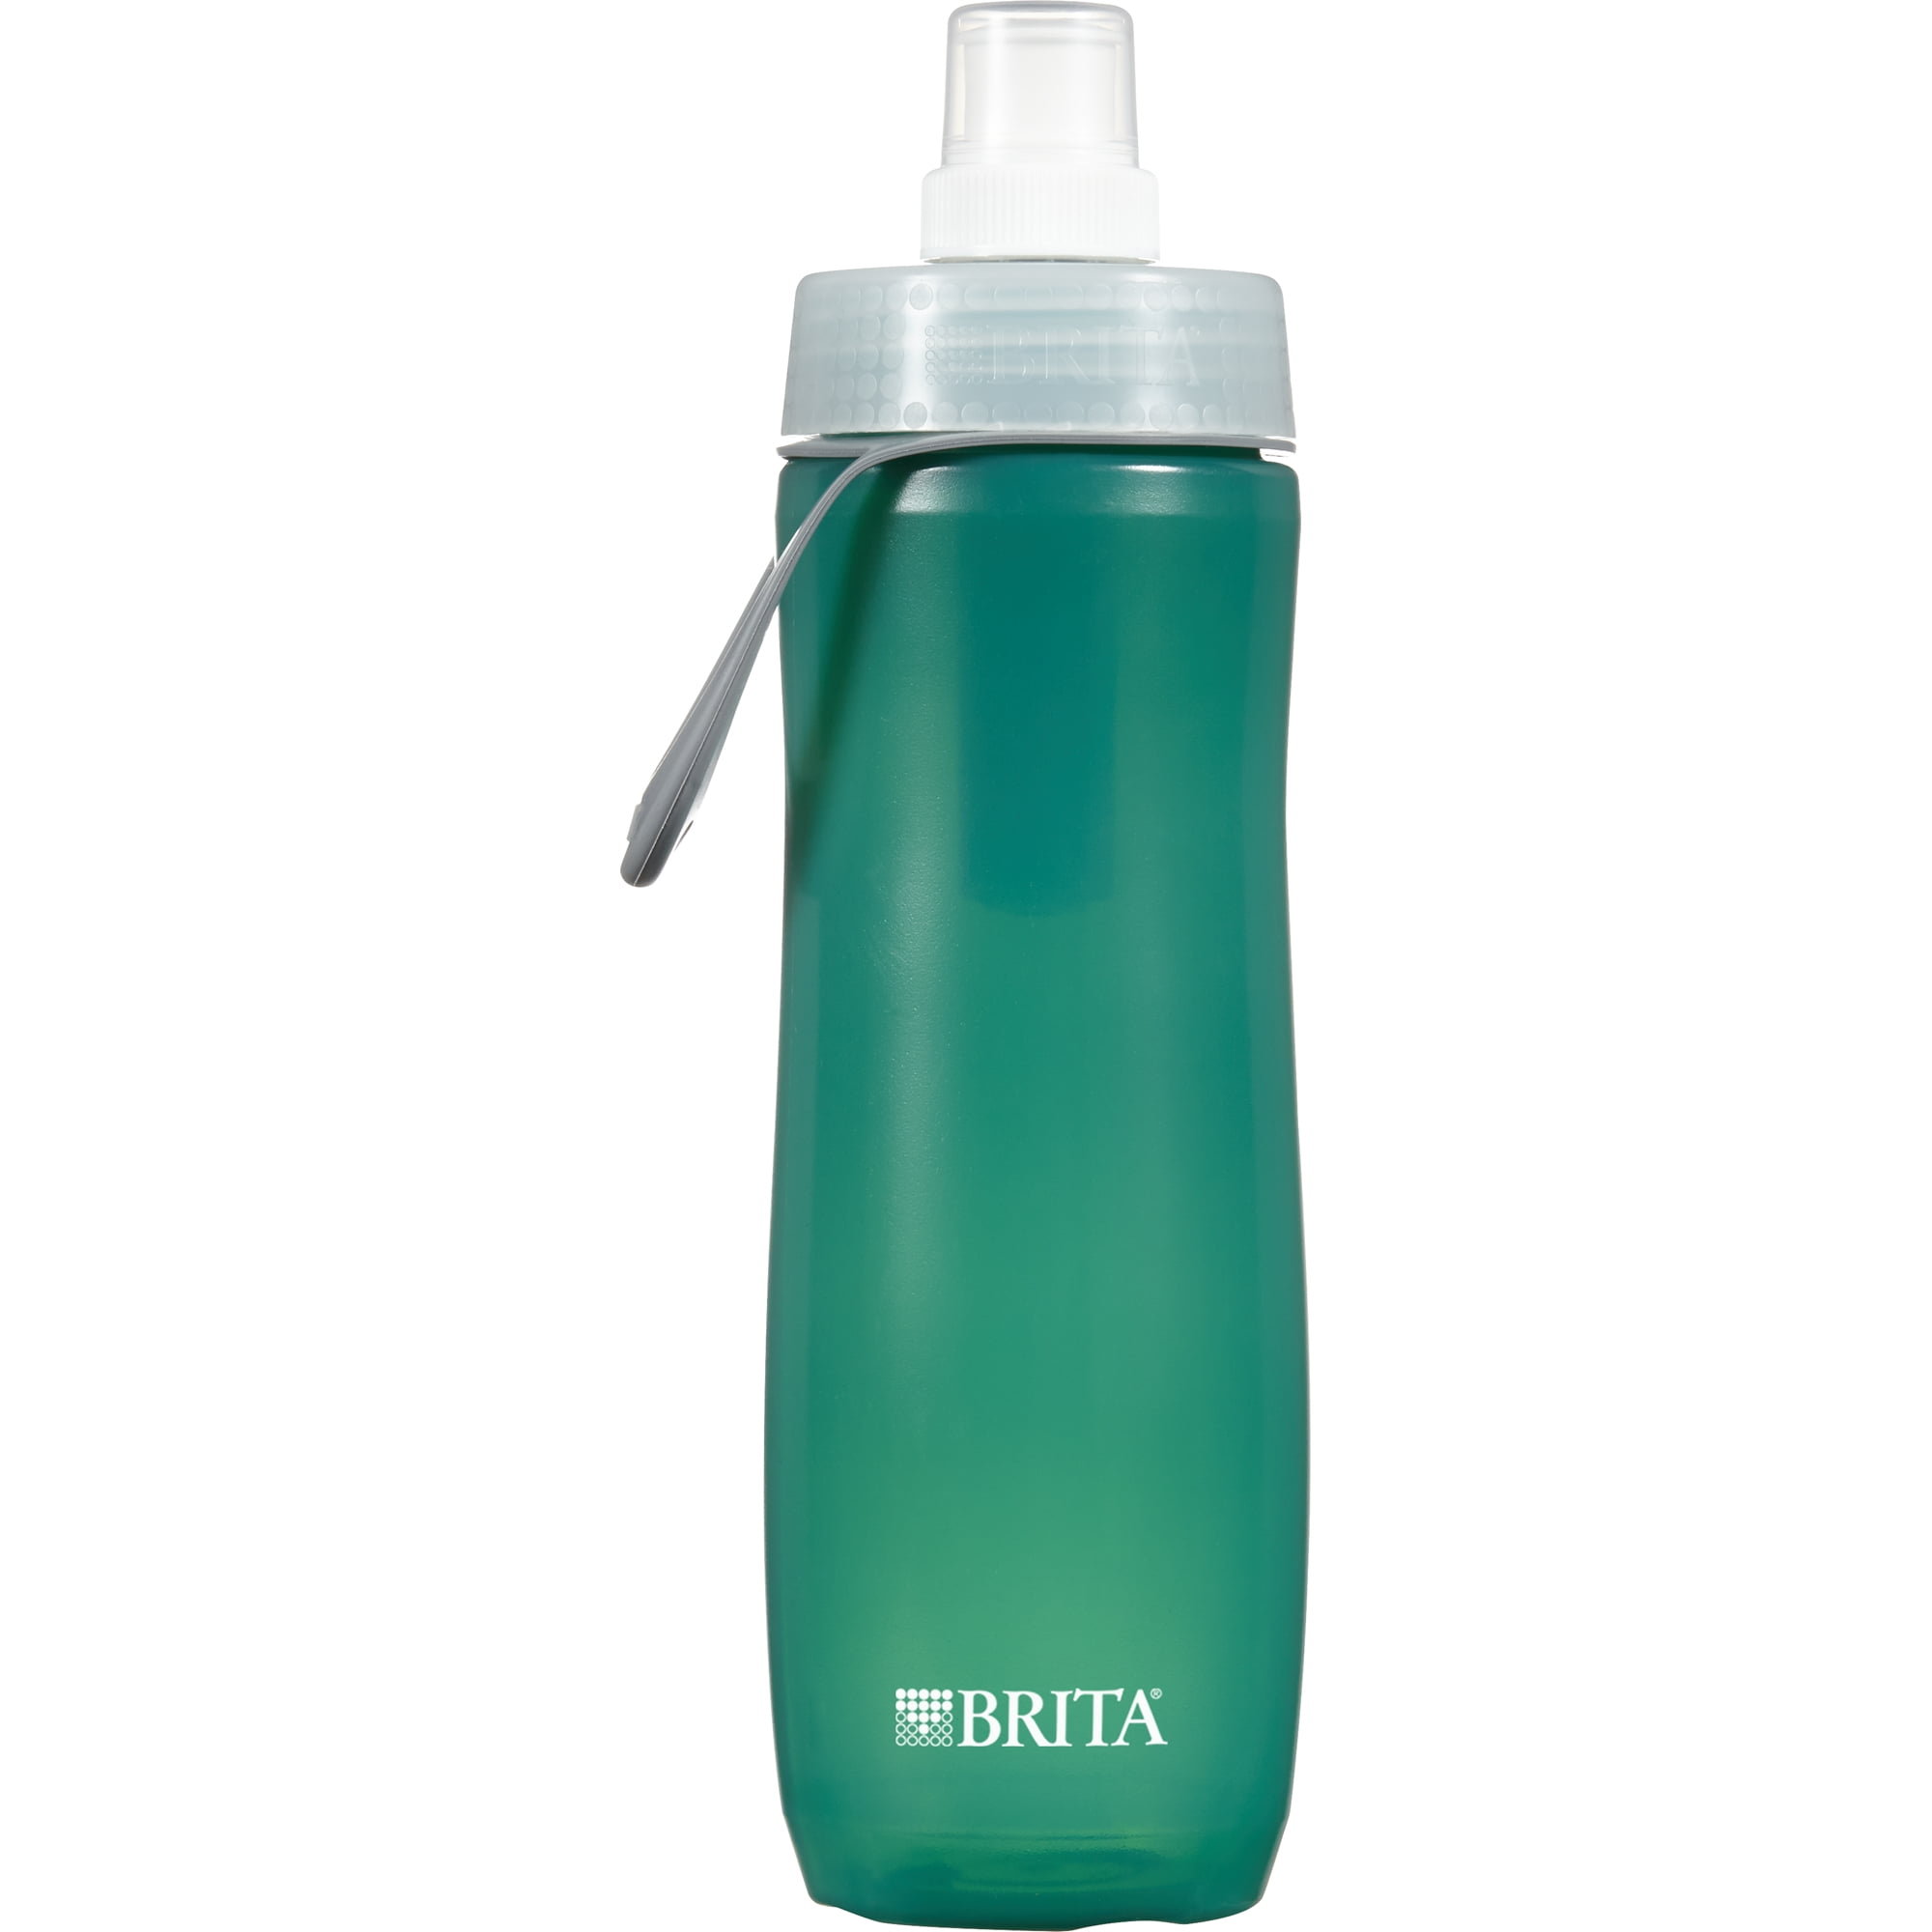 Brita Aqua & Green Soft Squeeze Water Filter Bottles - Shop Water